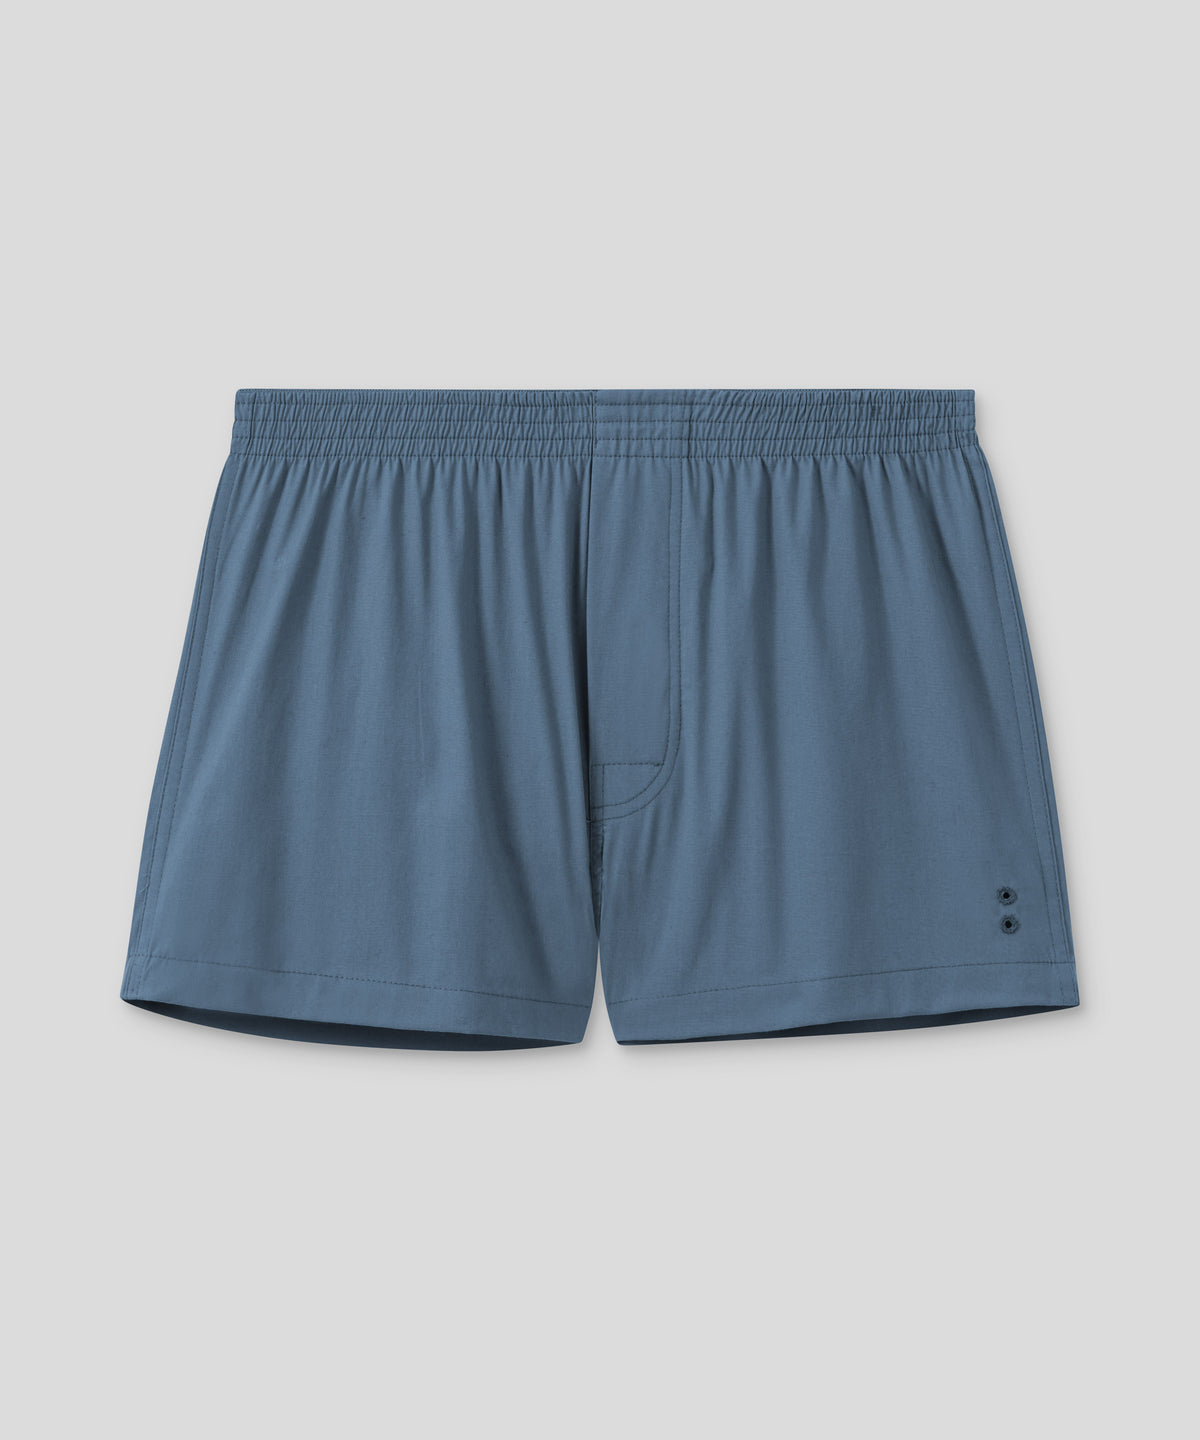 Boxer Shorts: Bering Sea